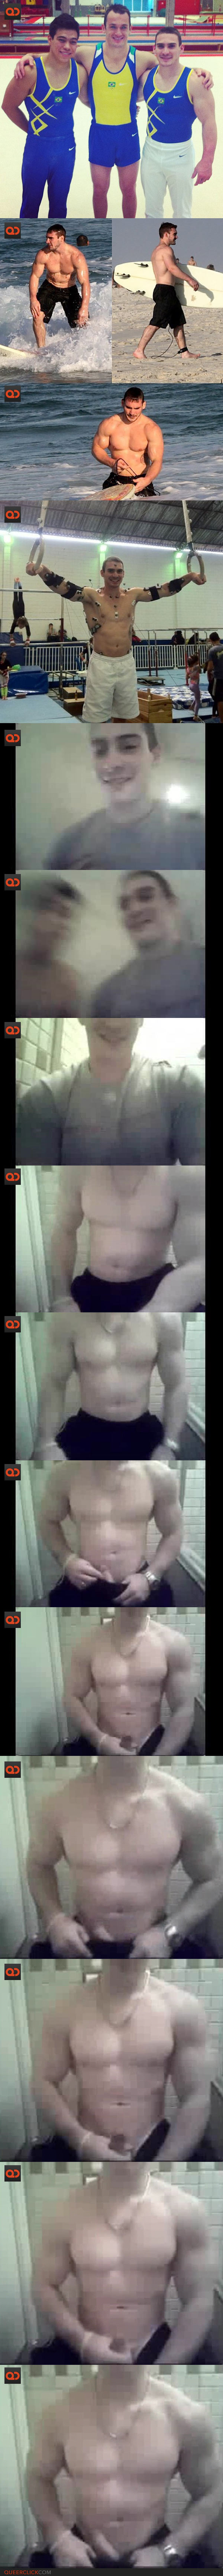 Brazilian Gymnasts Arthur Zanetti And Sergio Sasaki Leaked Nude Video Surfaces - Bonus: Teammate Arthur Nory Also Exposed!